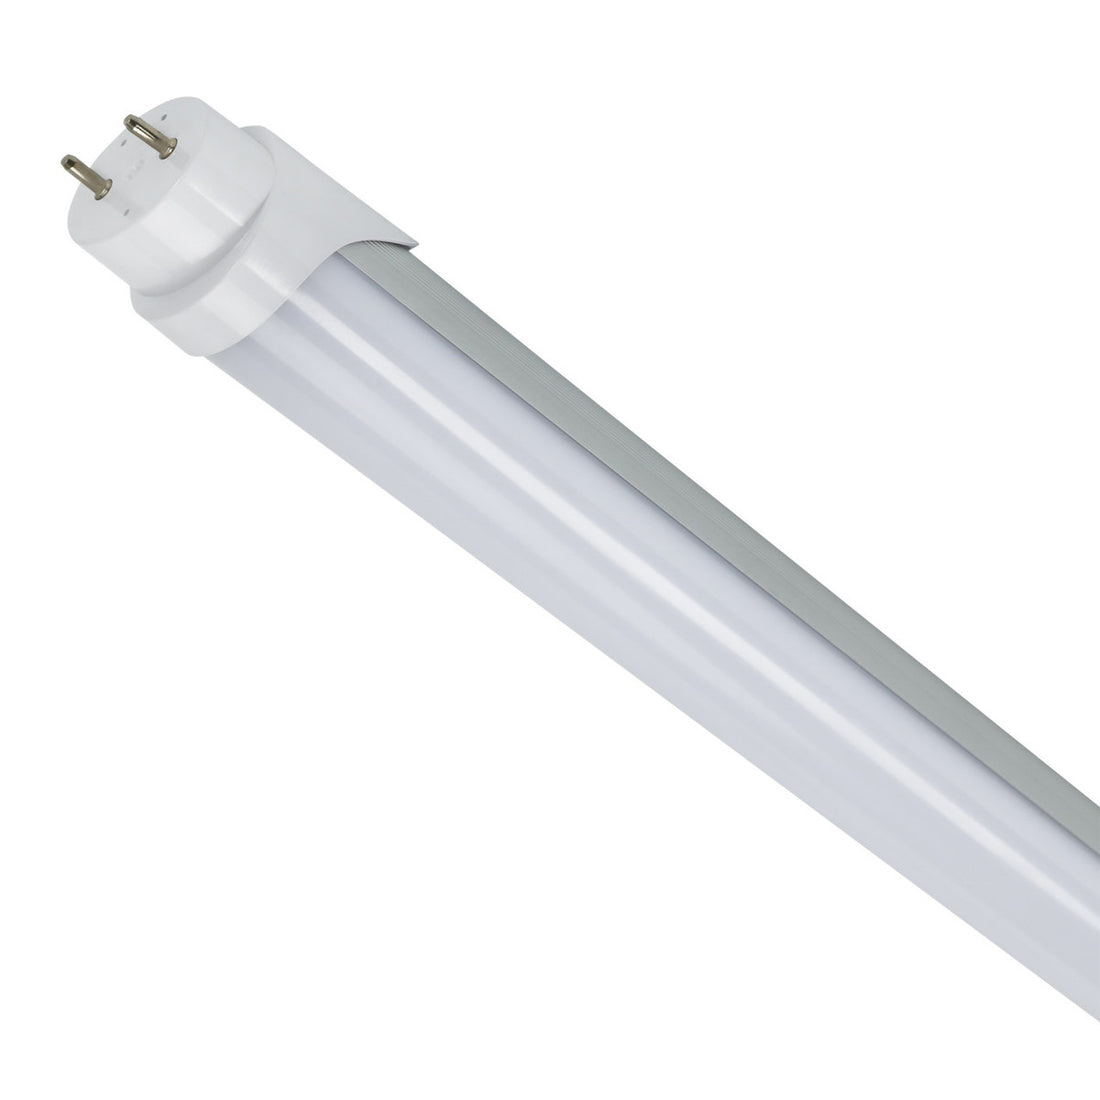 4ft LED Tube Light Light - 15W - 4000K Dual-Mode, 100-277VAC Input, Non-Dimming, Oval Aluminum Housing, Frosted Lens - 30 Pack